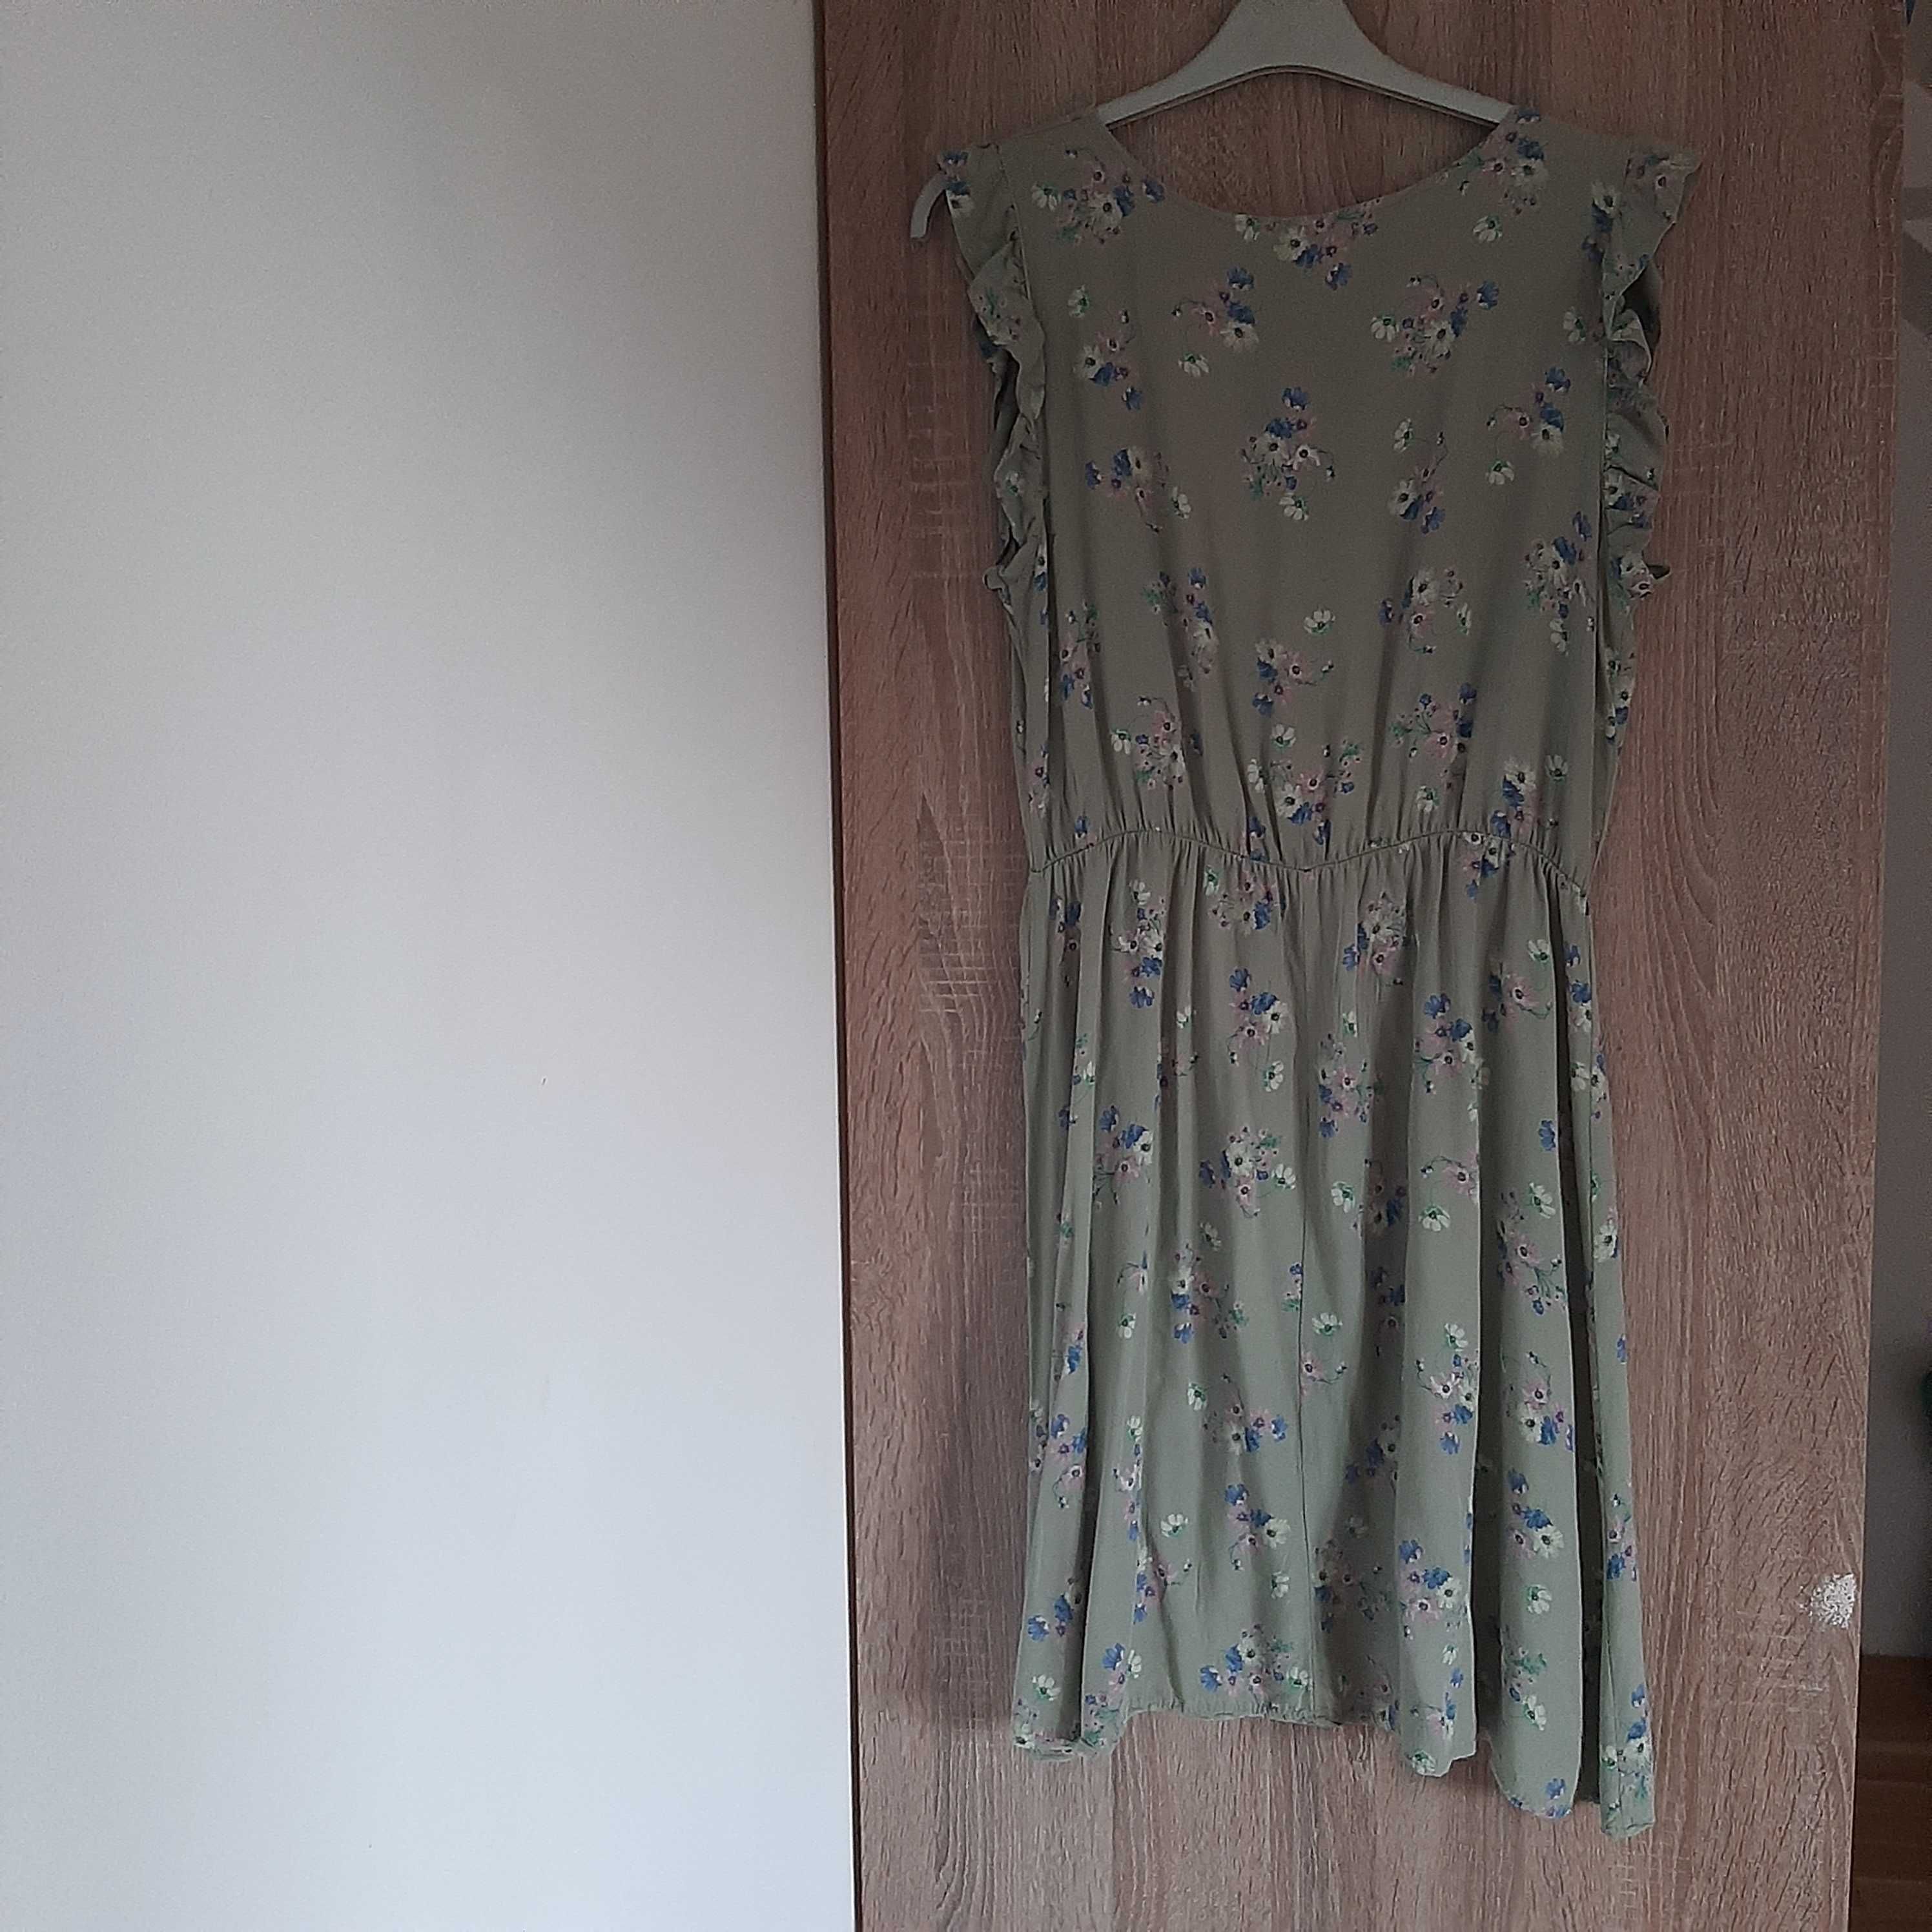 Ciemno zielona oliwkowa khaki kwiatowa sukienka M L 38 40